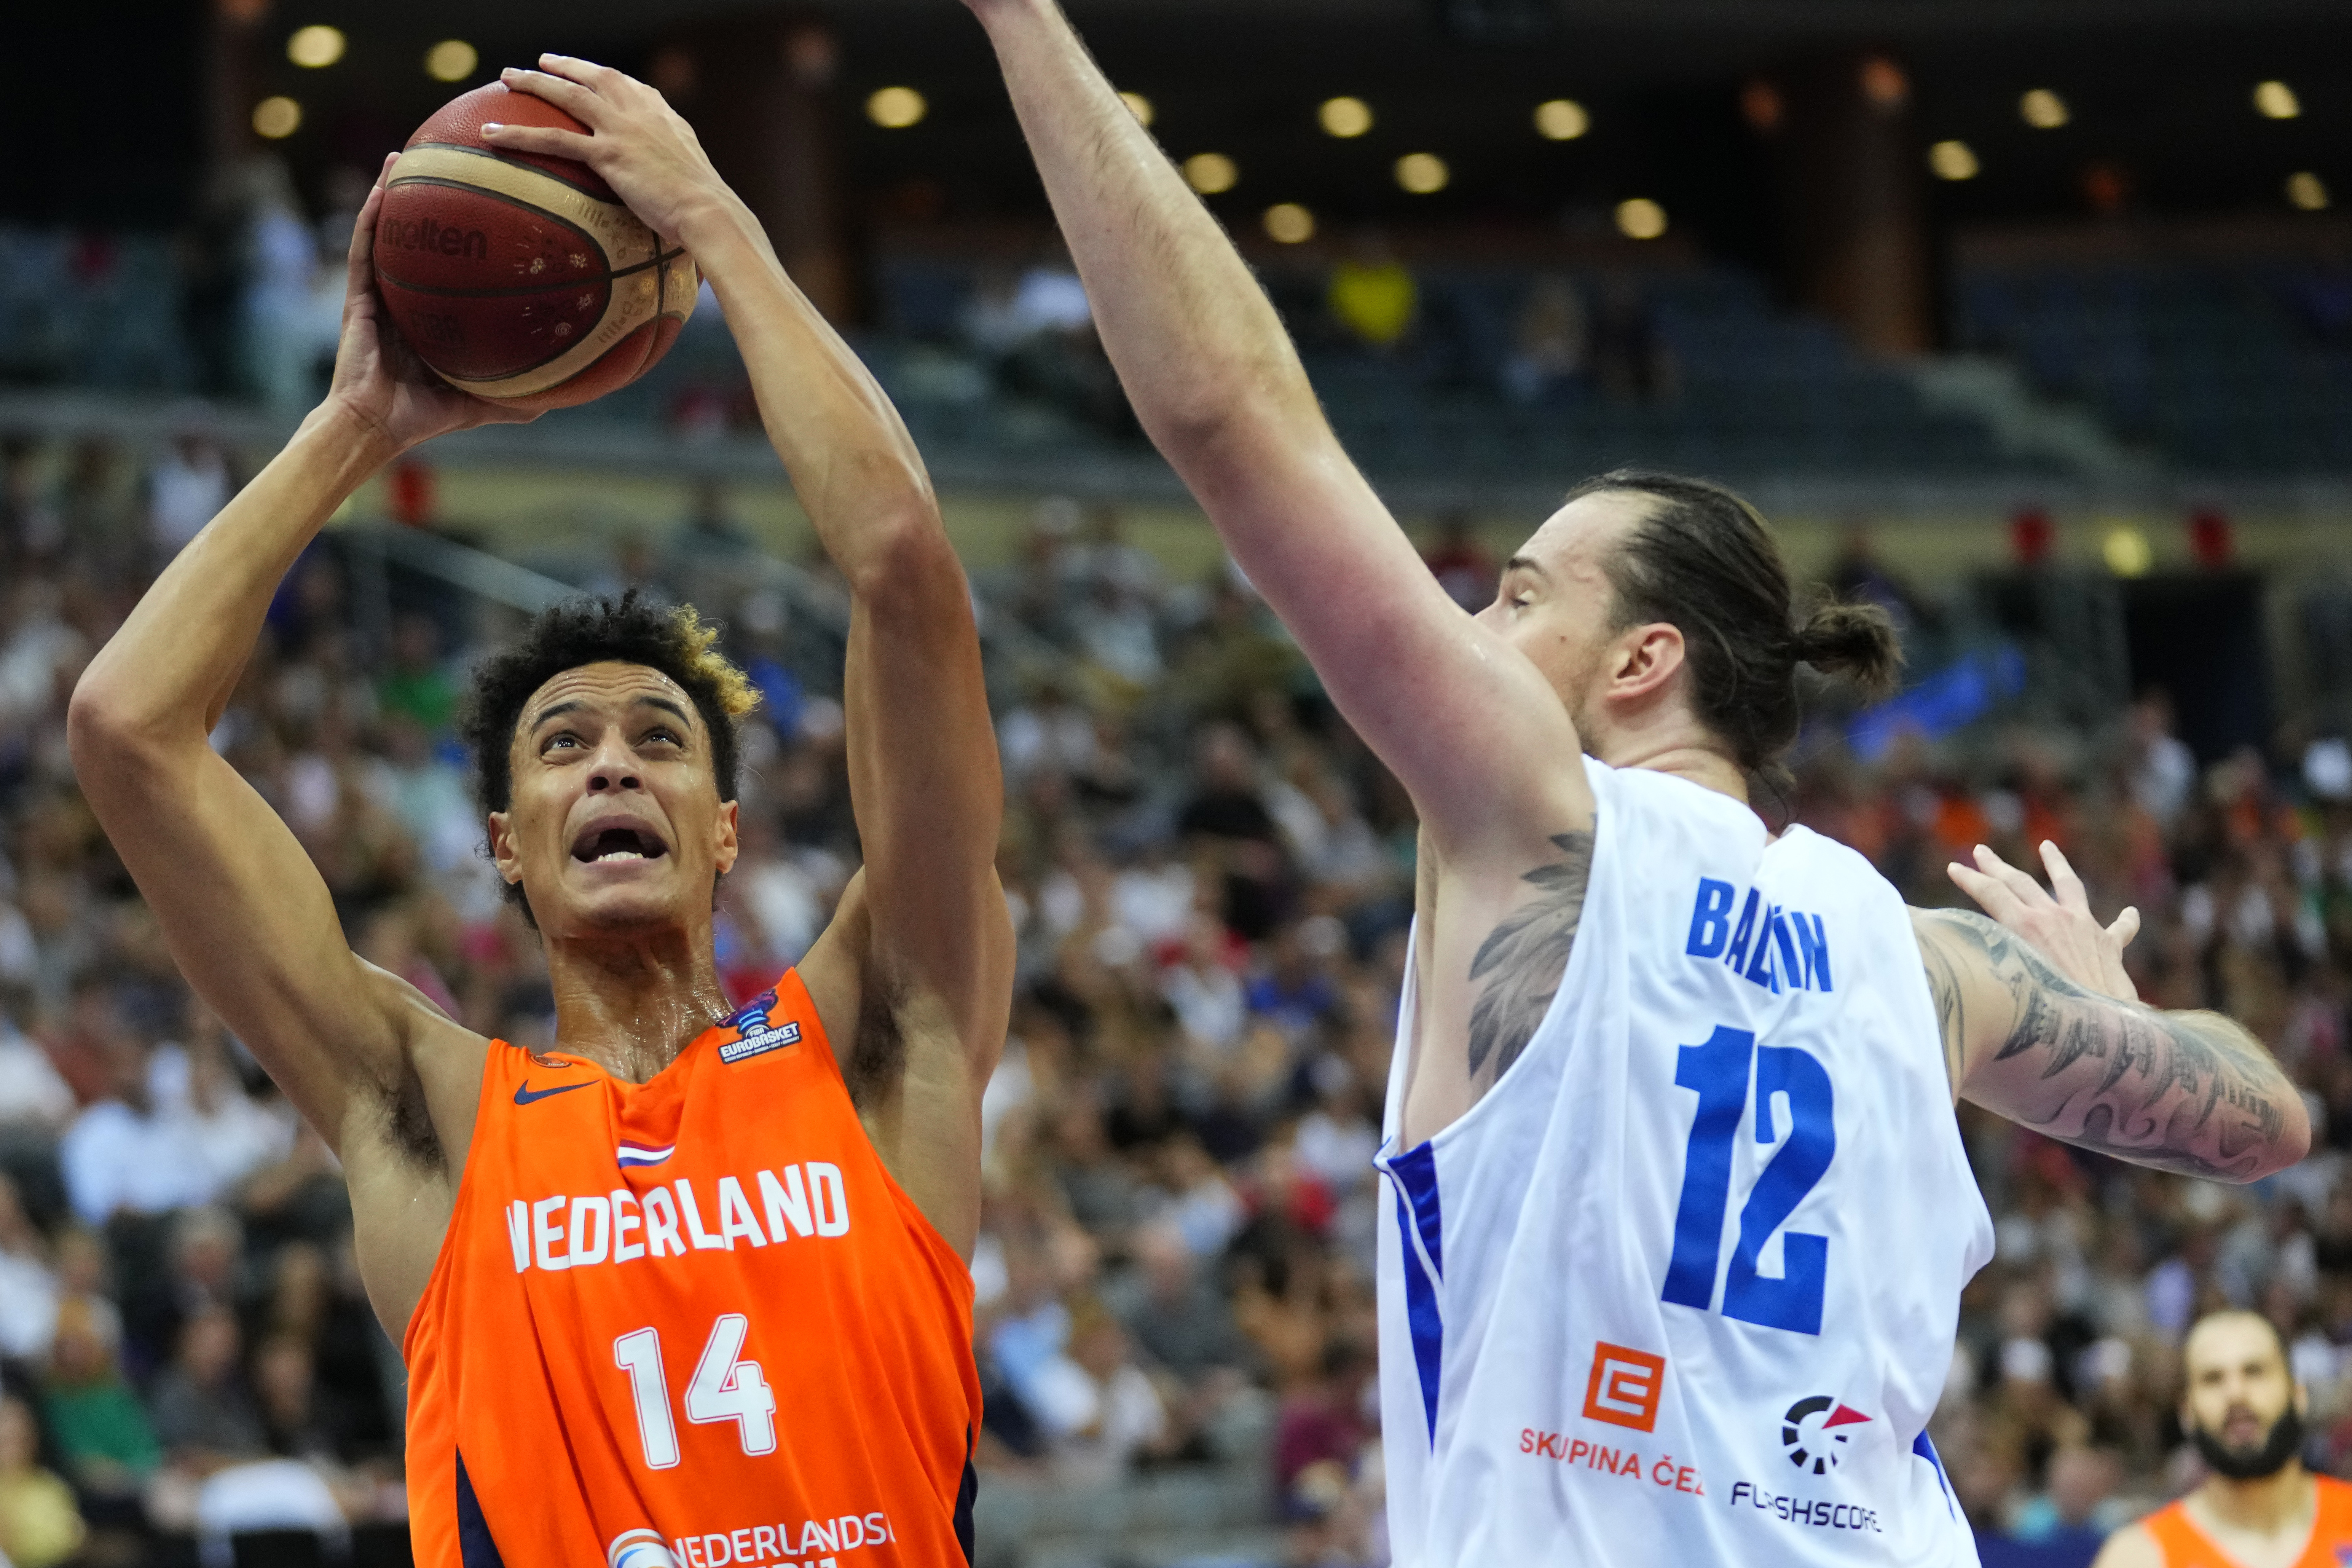 After slow start Syracuse center Jesse Edwards increased role with Netherlands National Team in EuroBasket